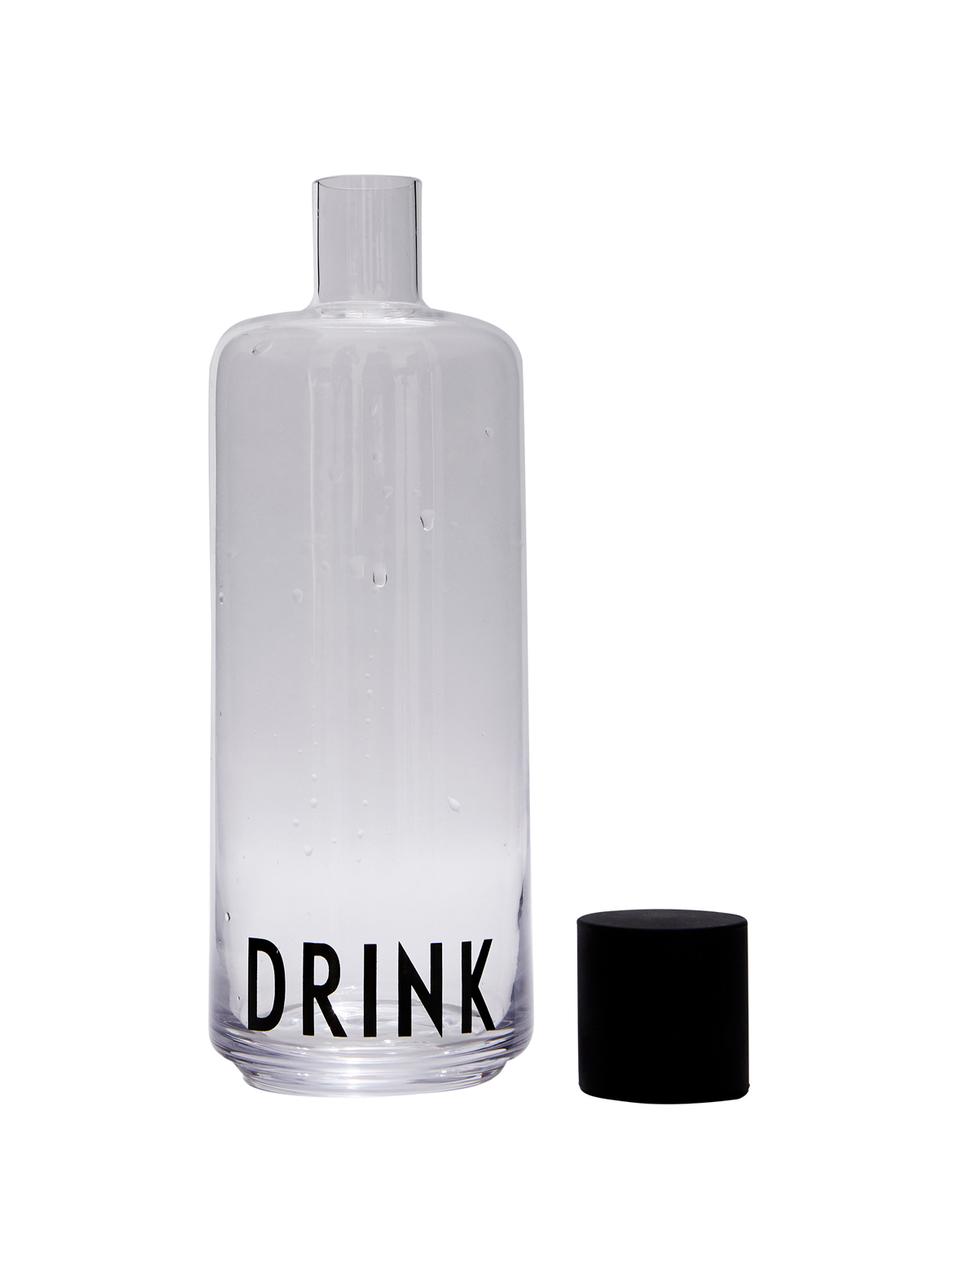 Design Karaffe Daily Drink mit Schriftzug, 1 L, Transparent, 1 L